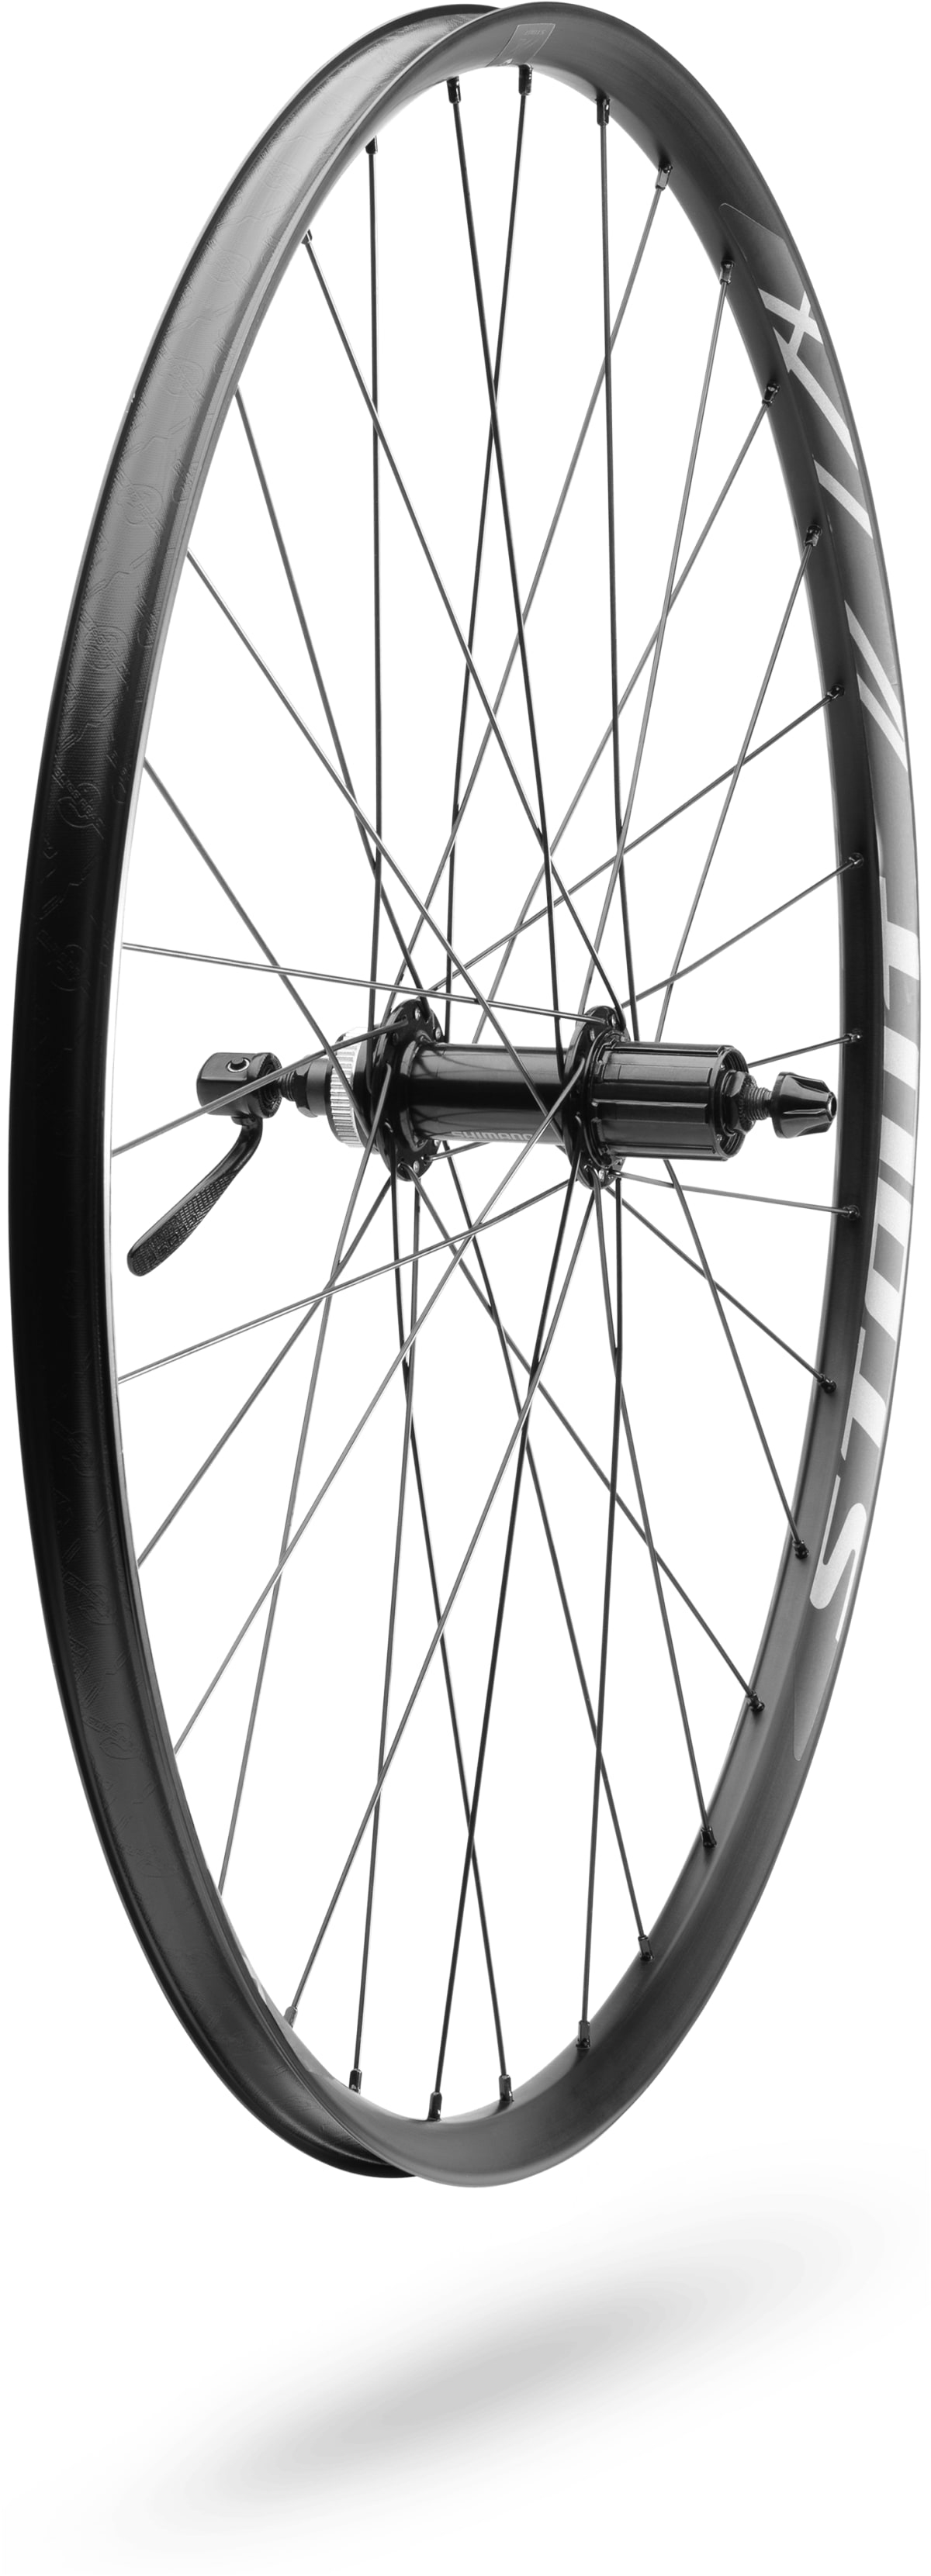 specialized stout xc 29 wheels